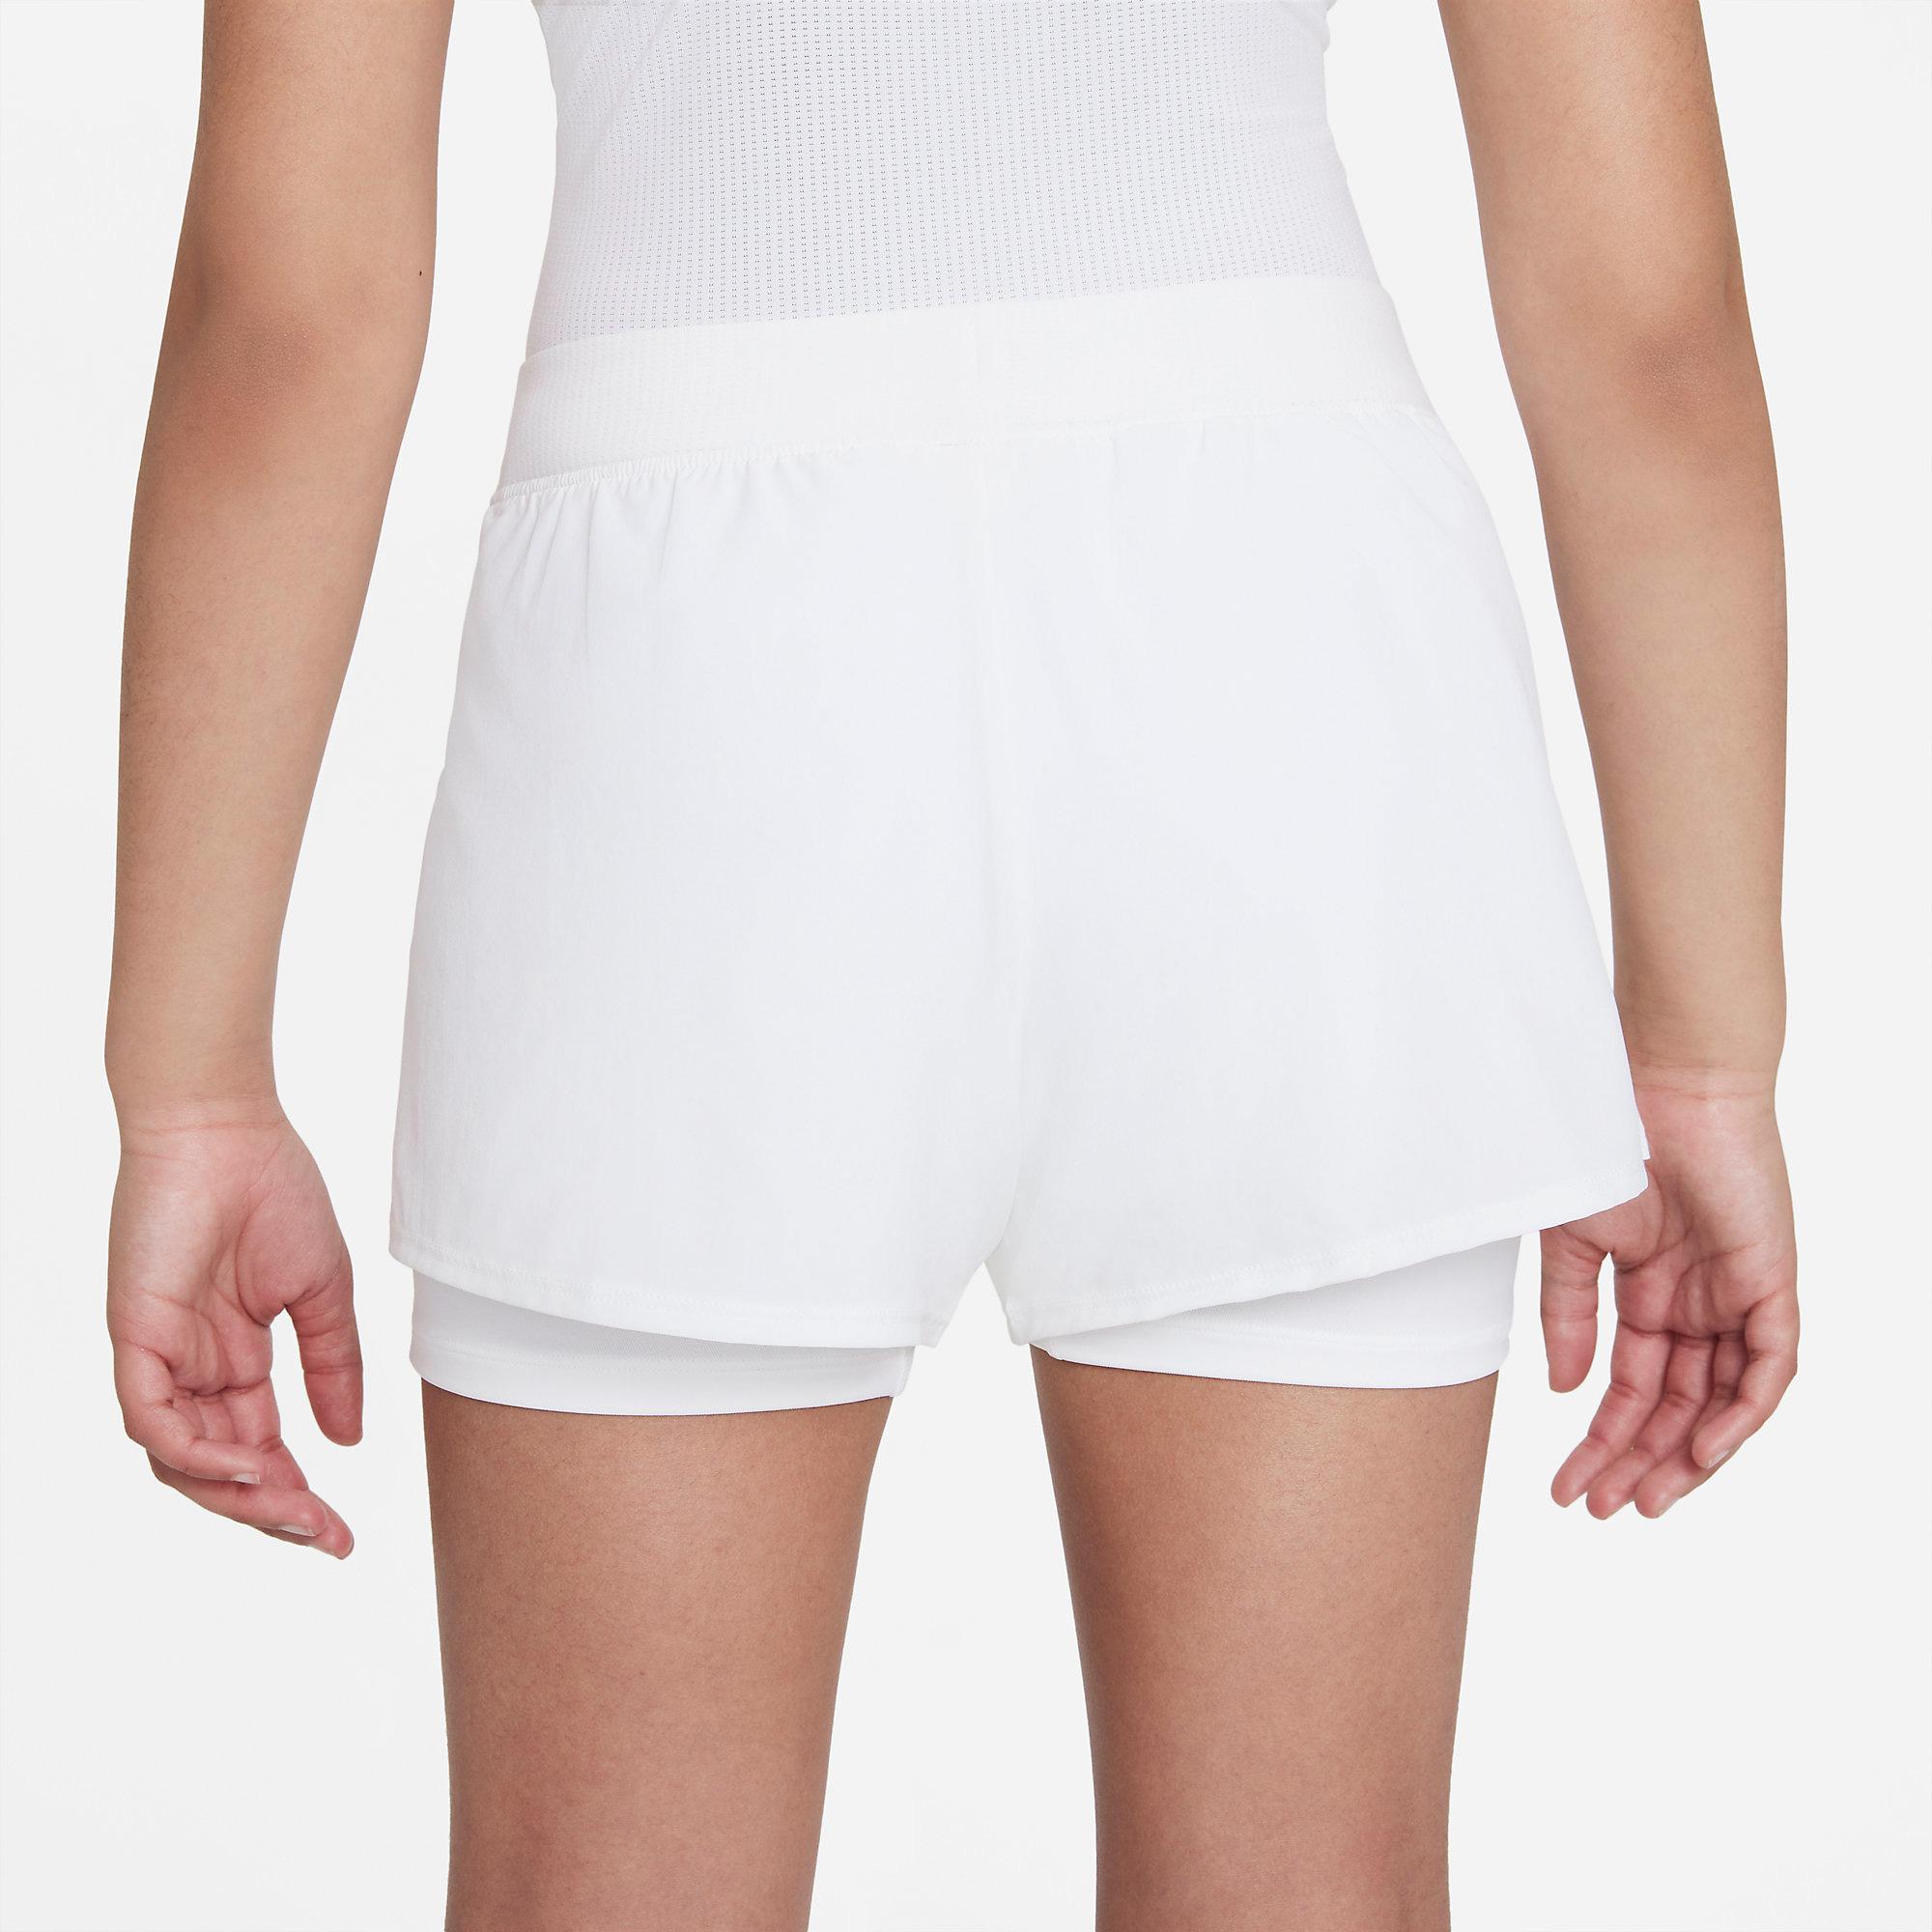 Nike Girls Victory Shorts - White - Tennisnuts.com